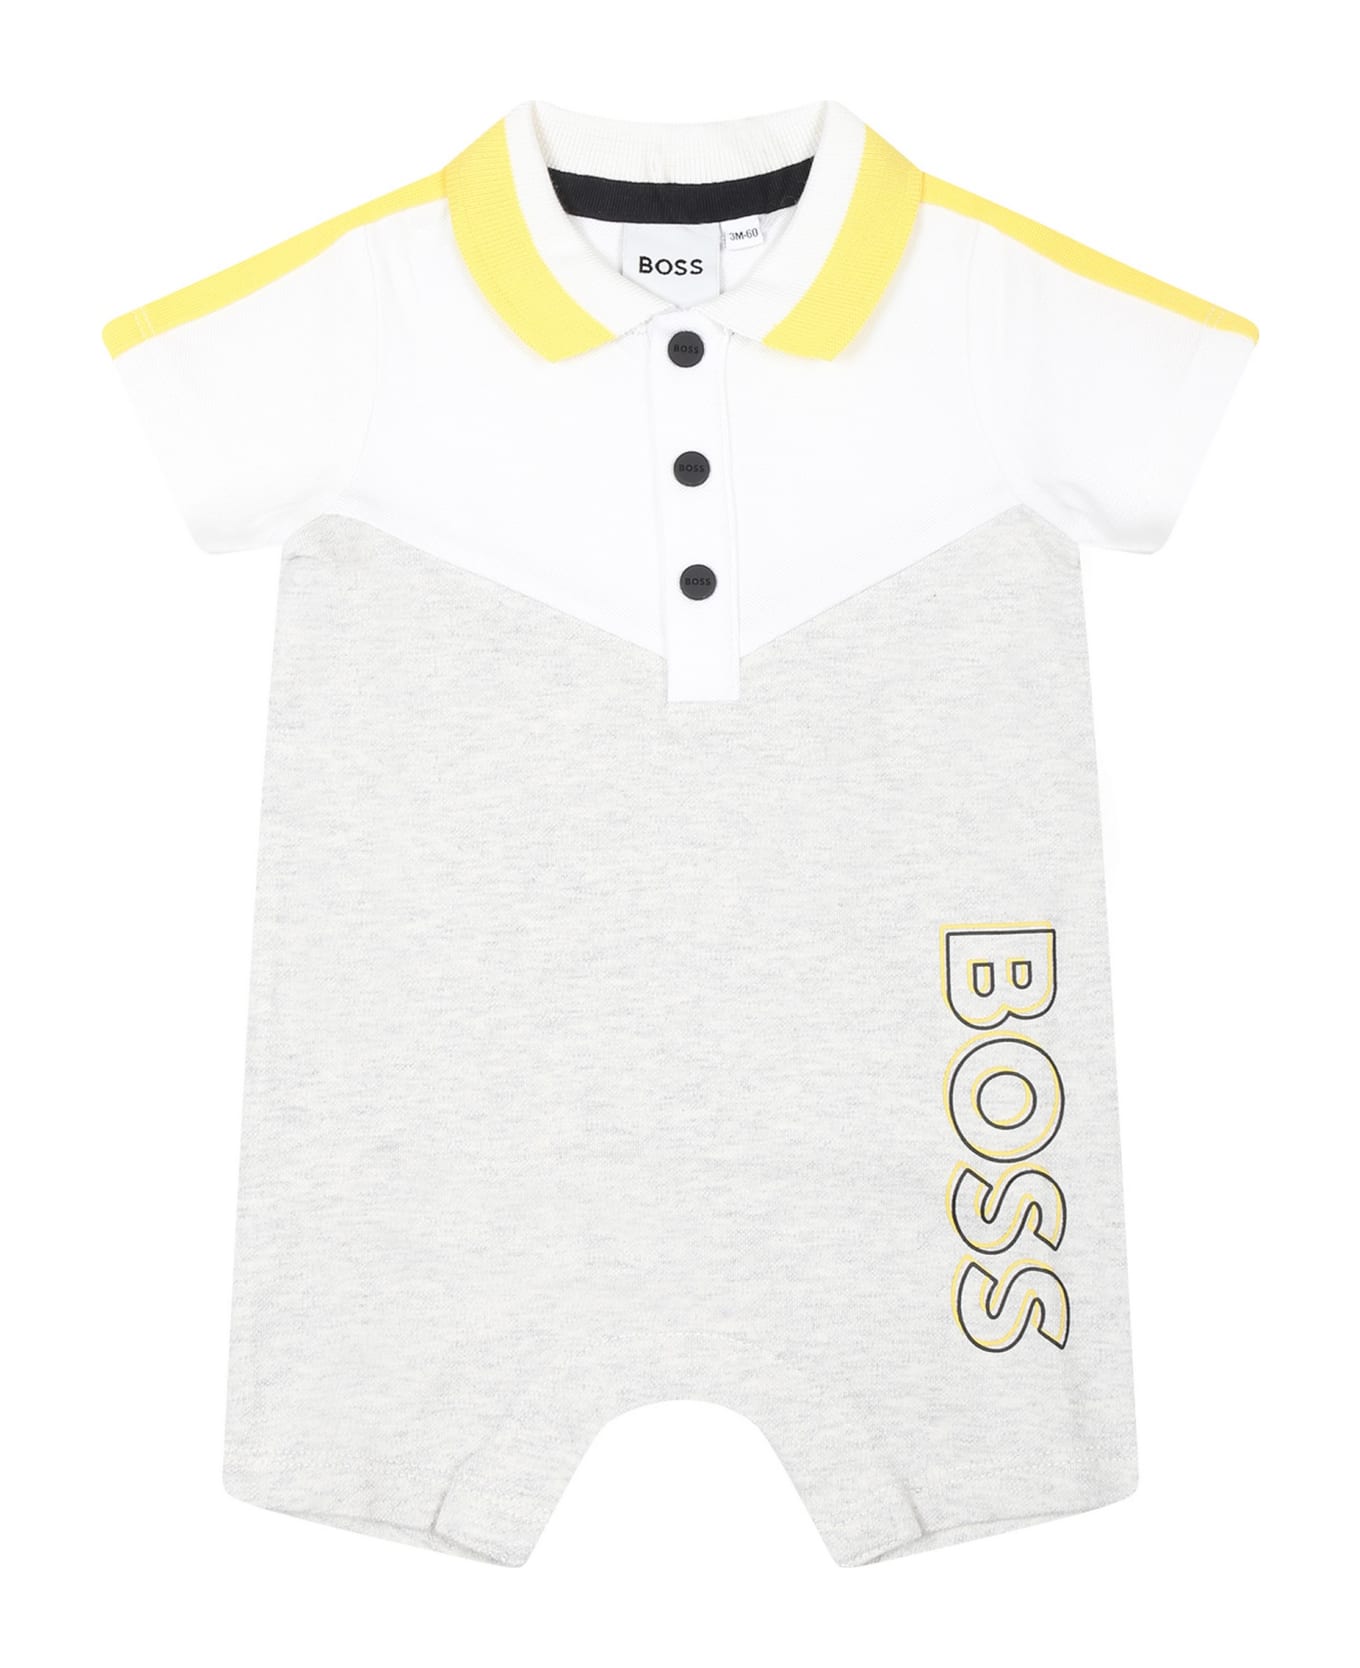 Hugo Boss Grey Romper For Baby Boy With Logo - Grey